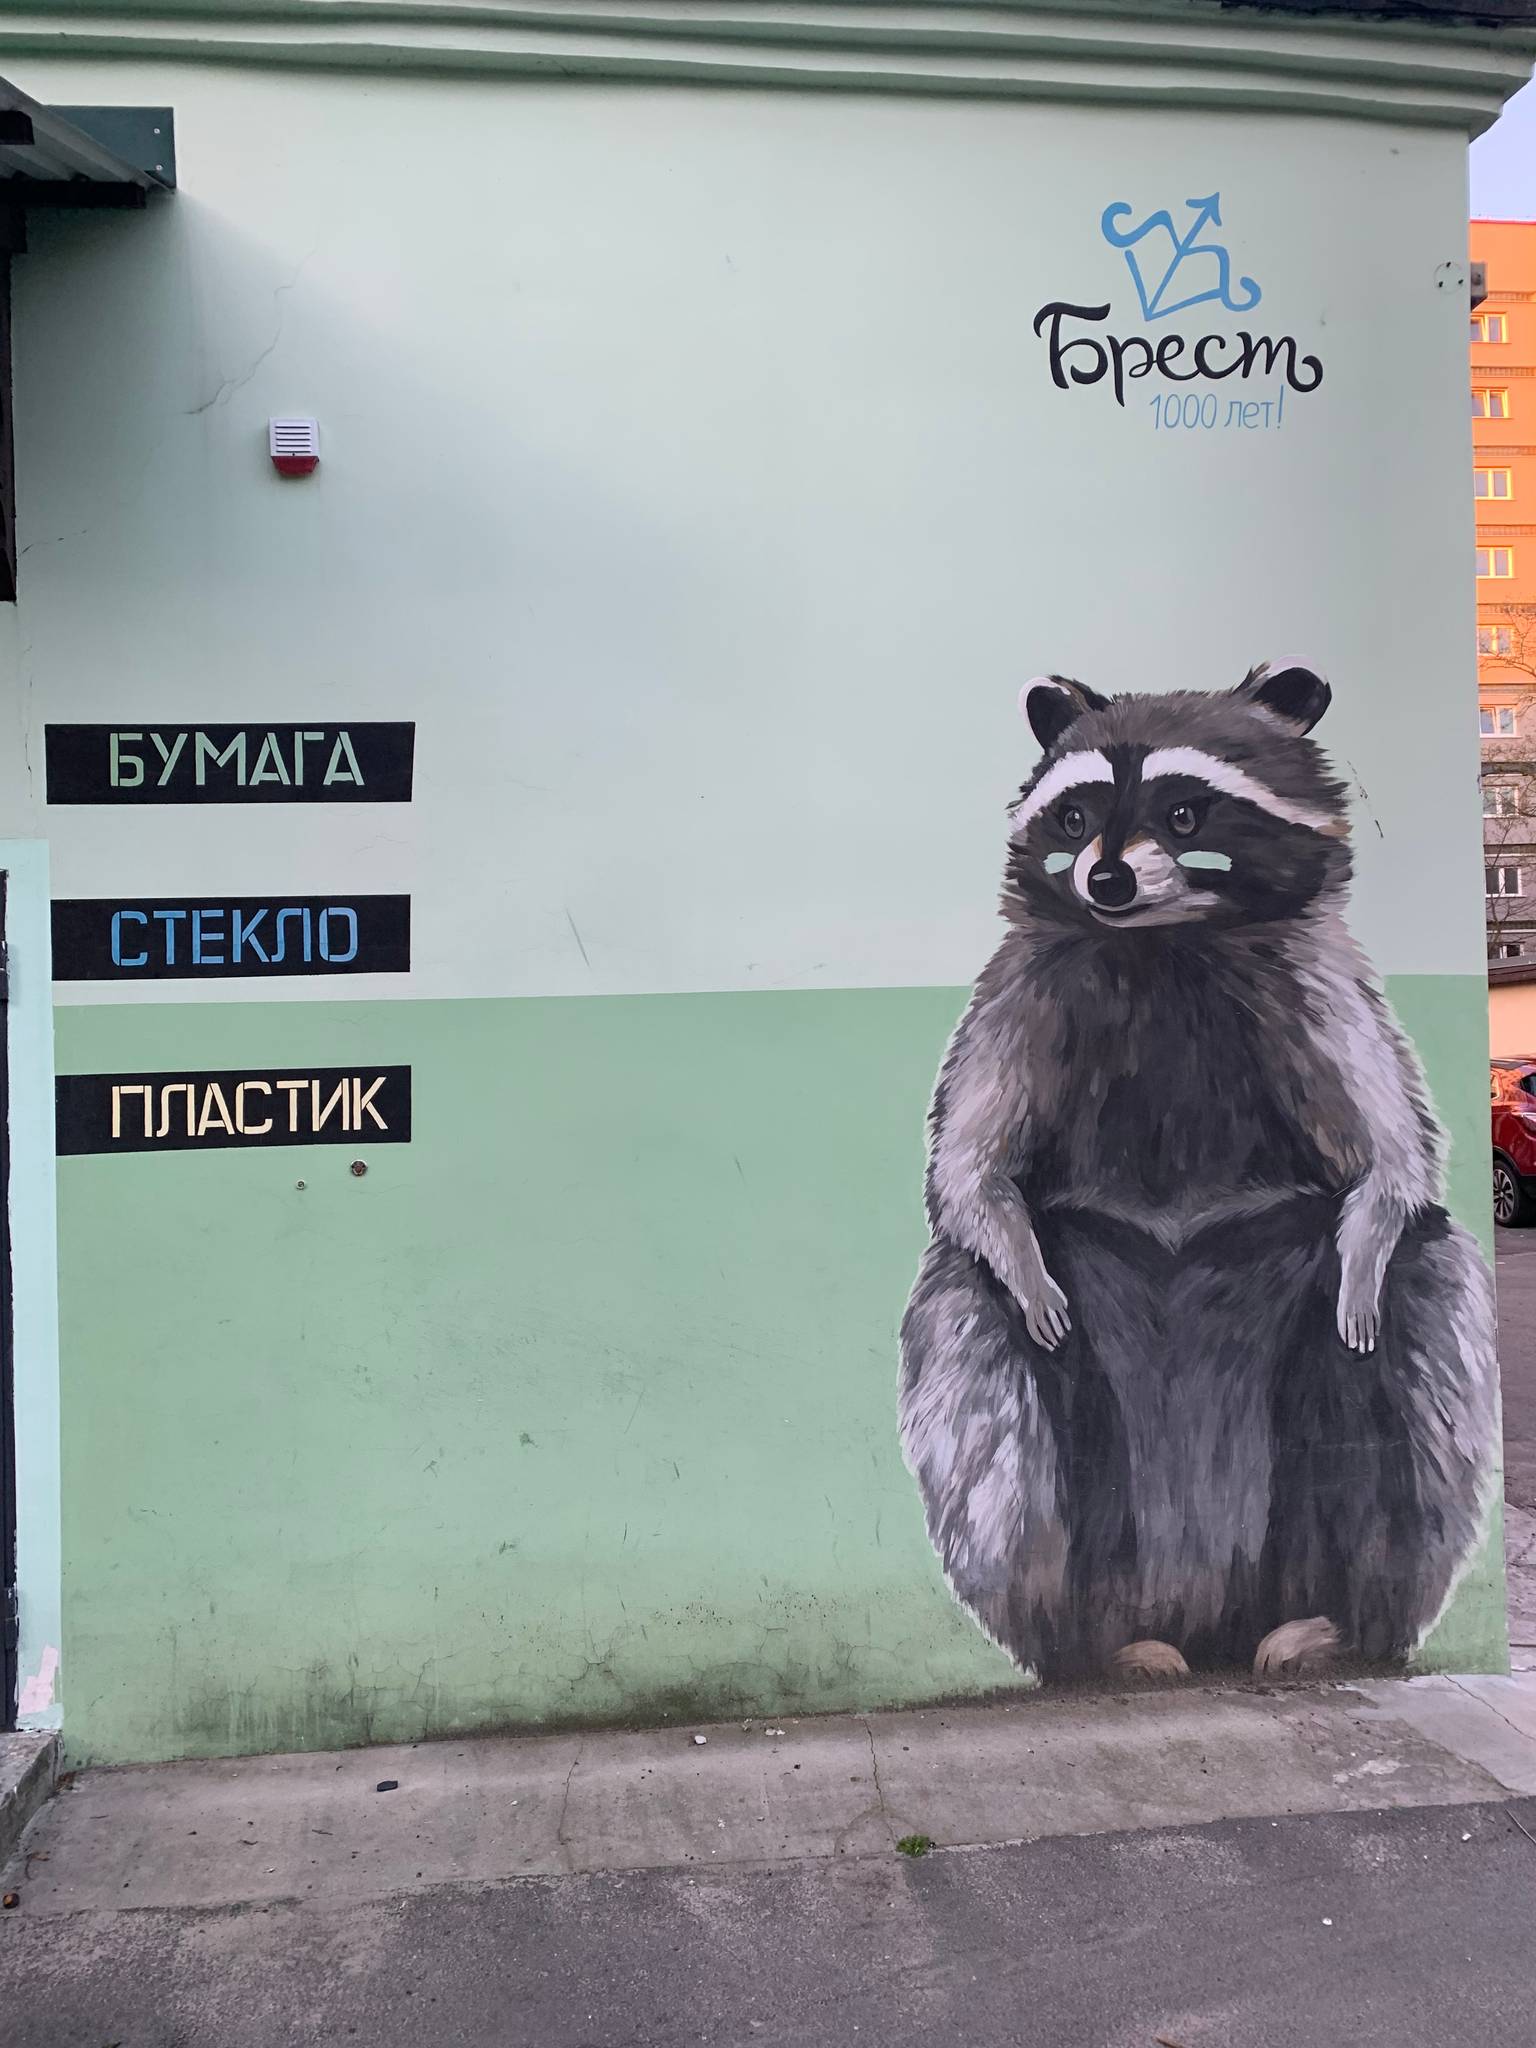 Лёня Василькович (vasiLkovich)&mdash;"Raccoons"